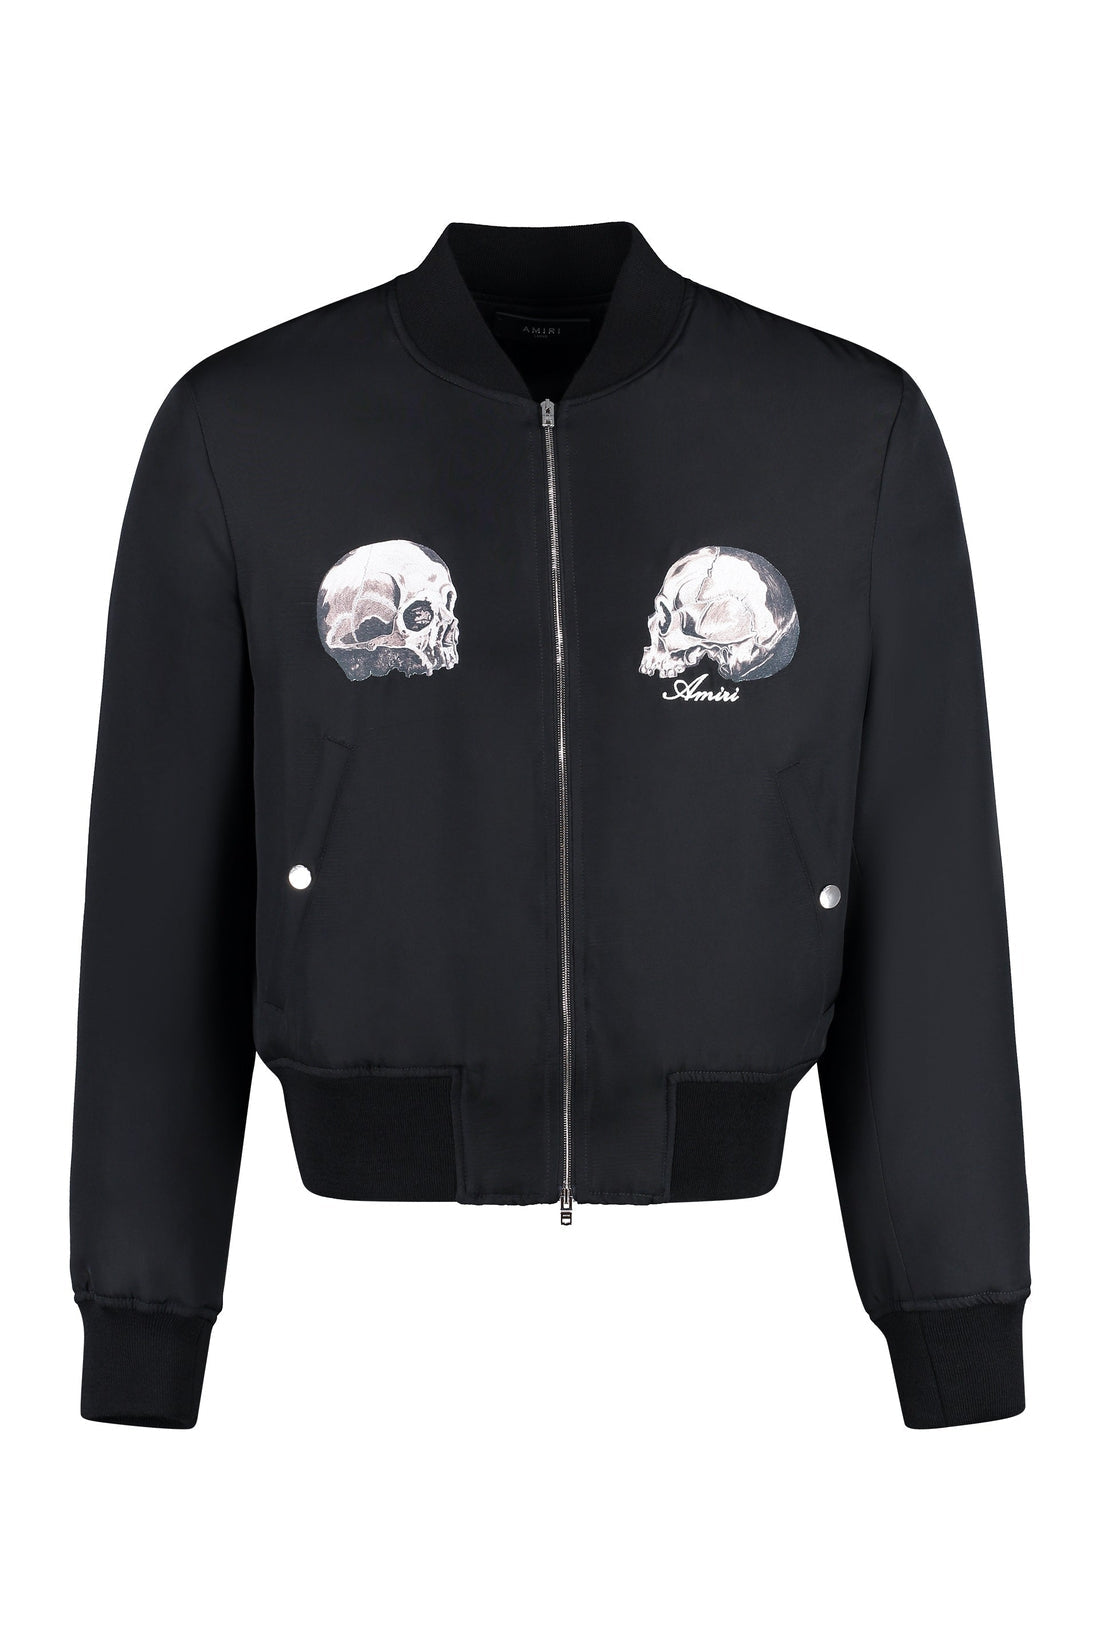 AMIRI-OUTLET-SALE-Silk bomber jacket-ARCHIVIST